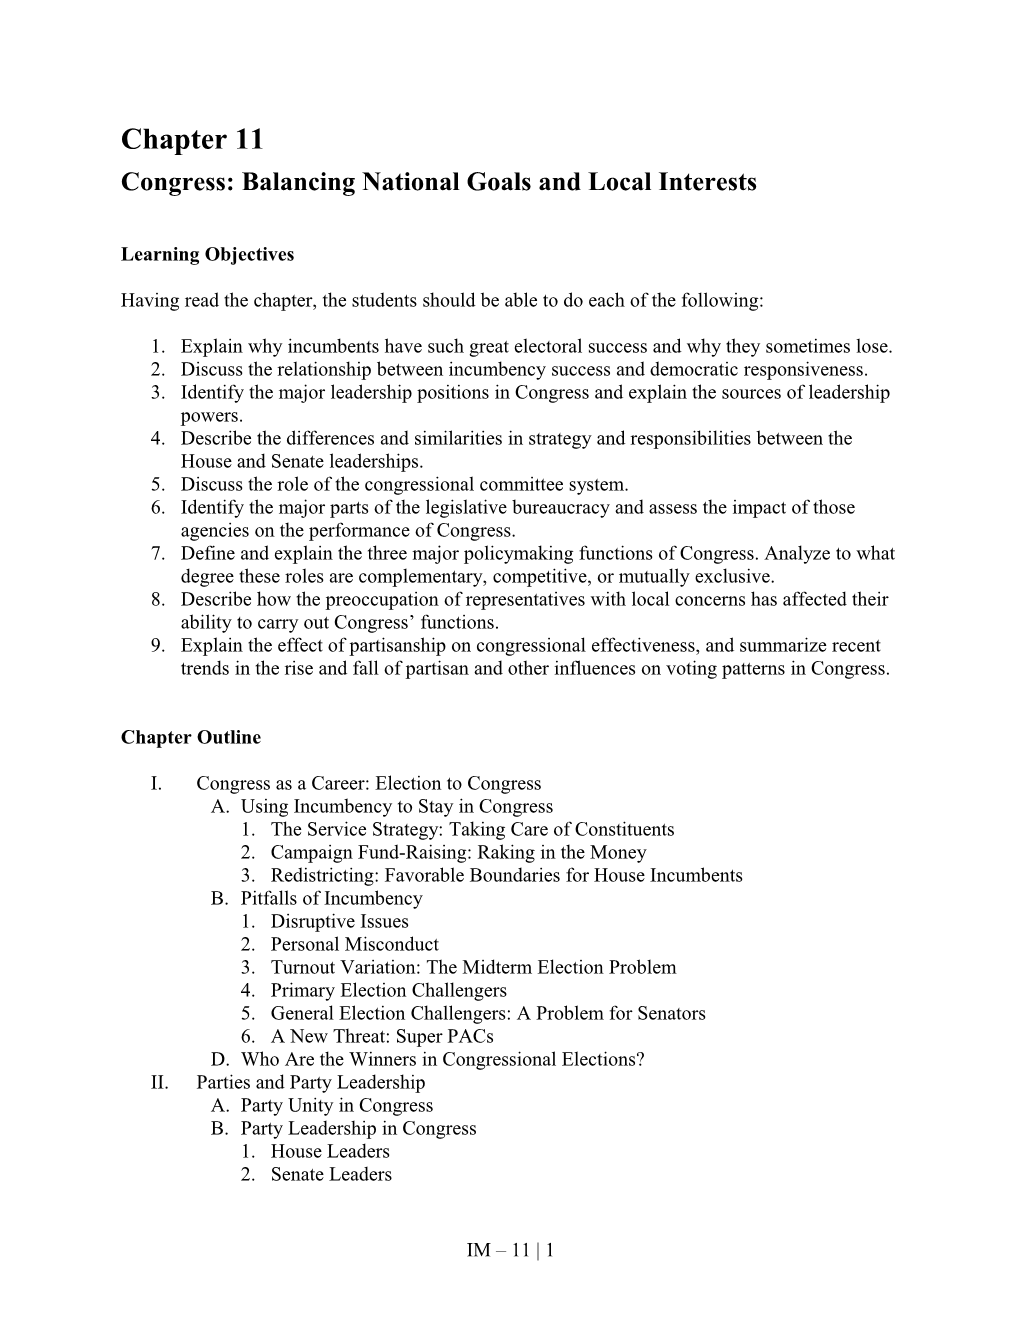 Congress: Balancing National Goals and Local Interests